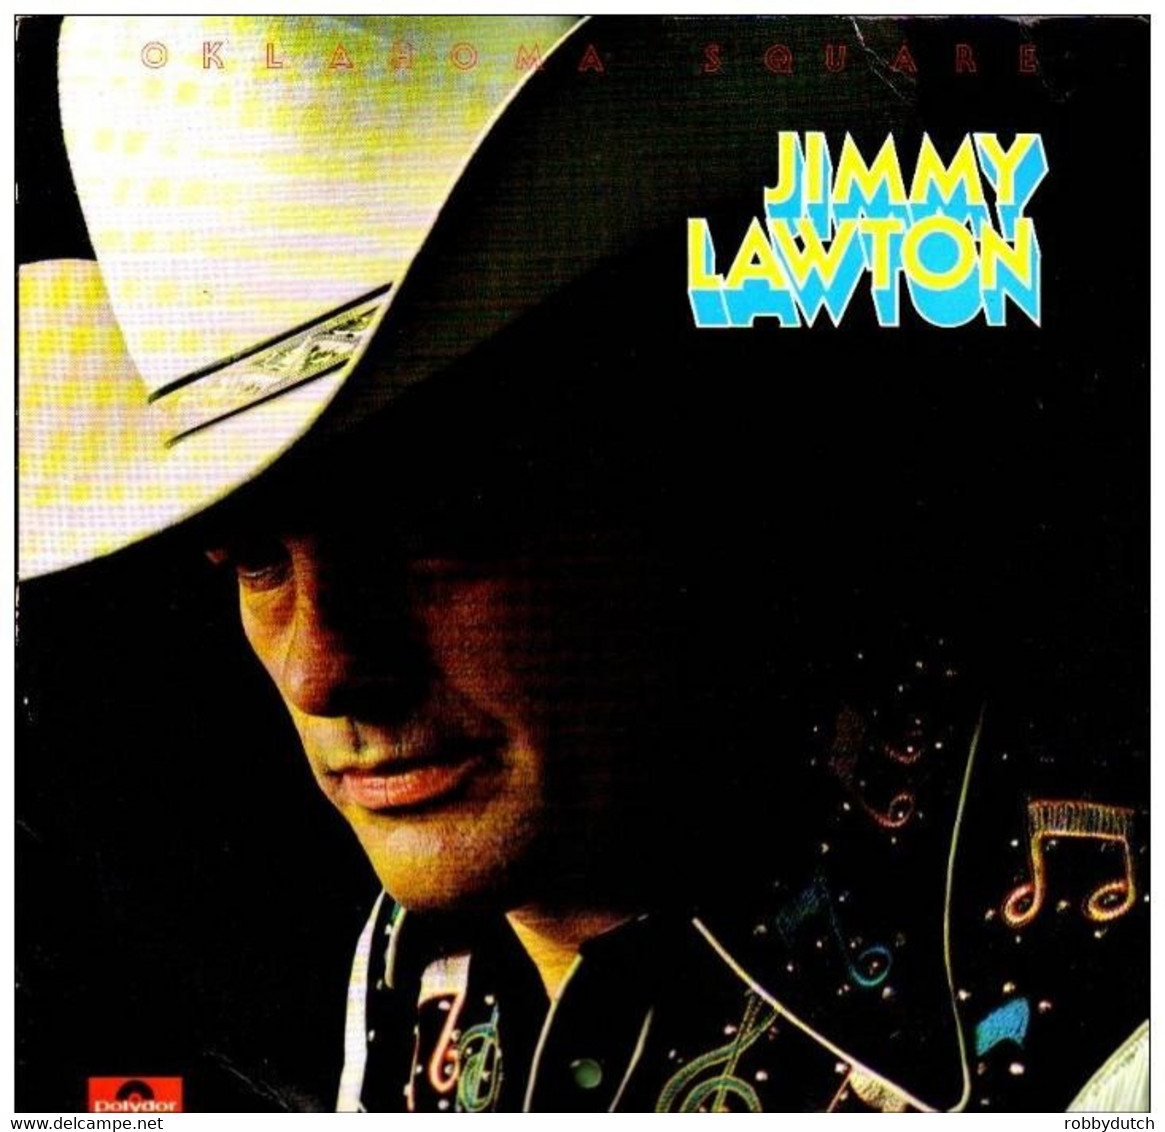 * LP * JIMMY LAWTON - OKLAHOMA SQUARE (Holland 1979) - Country Y Folk